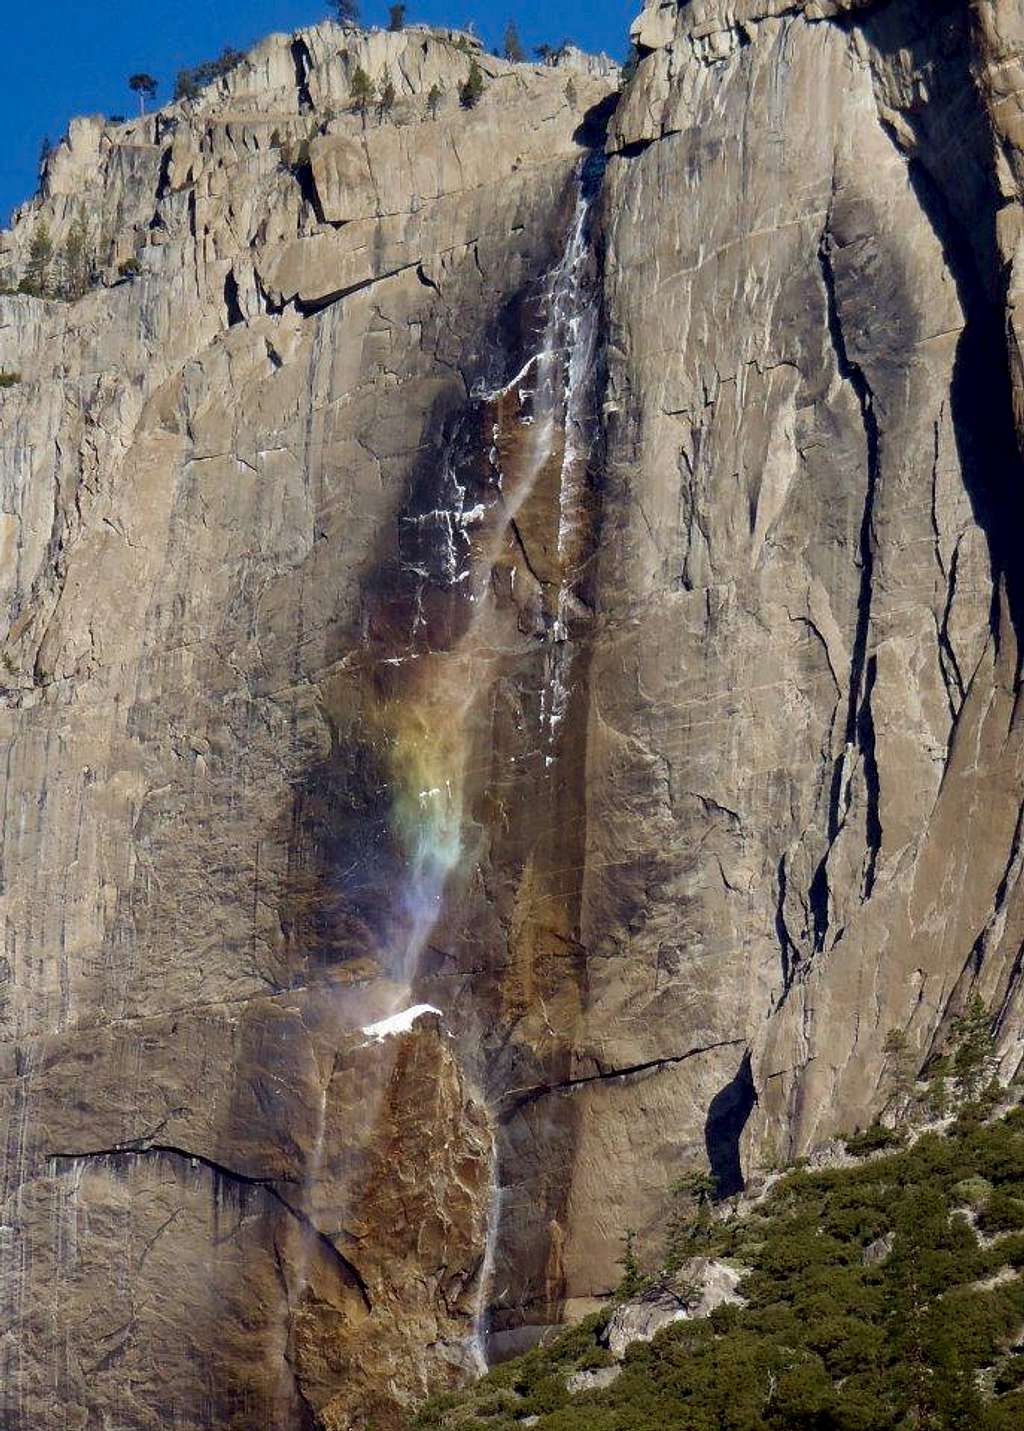 Yosemite Falls with rainbow off of the mist